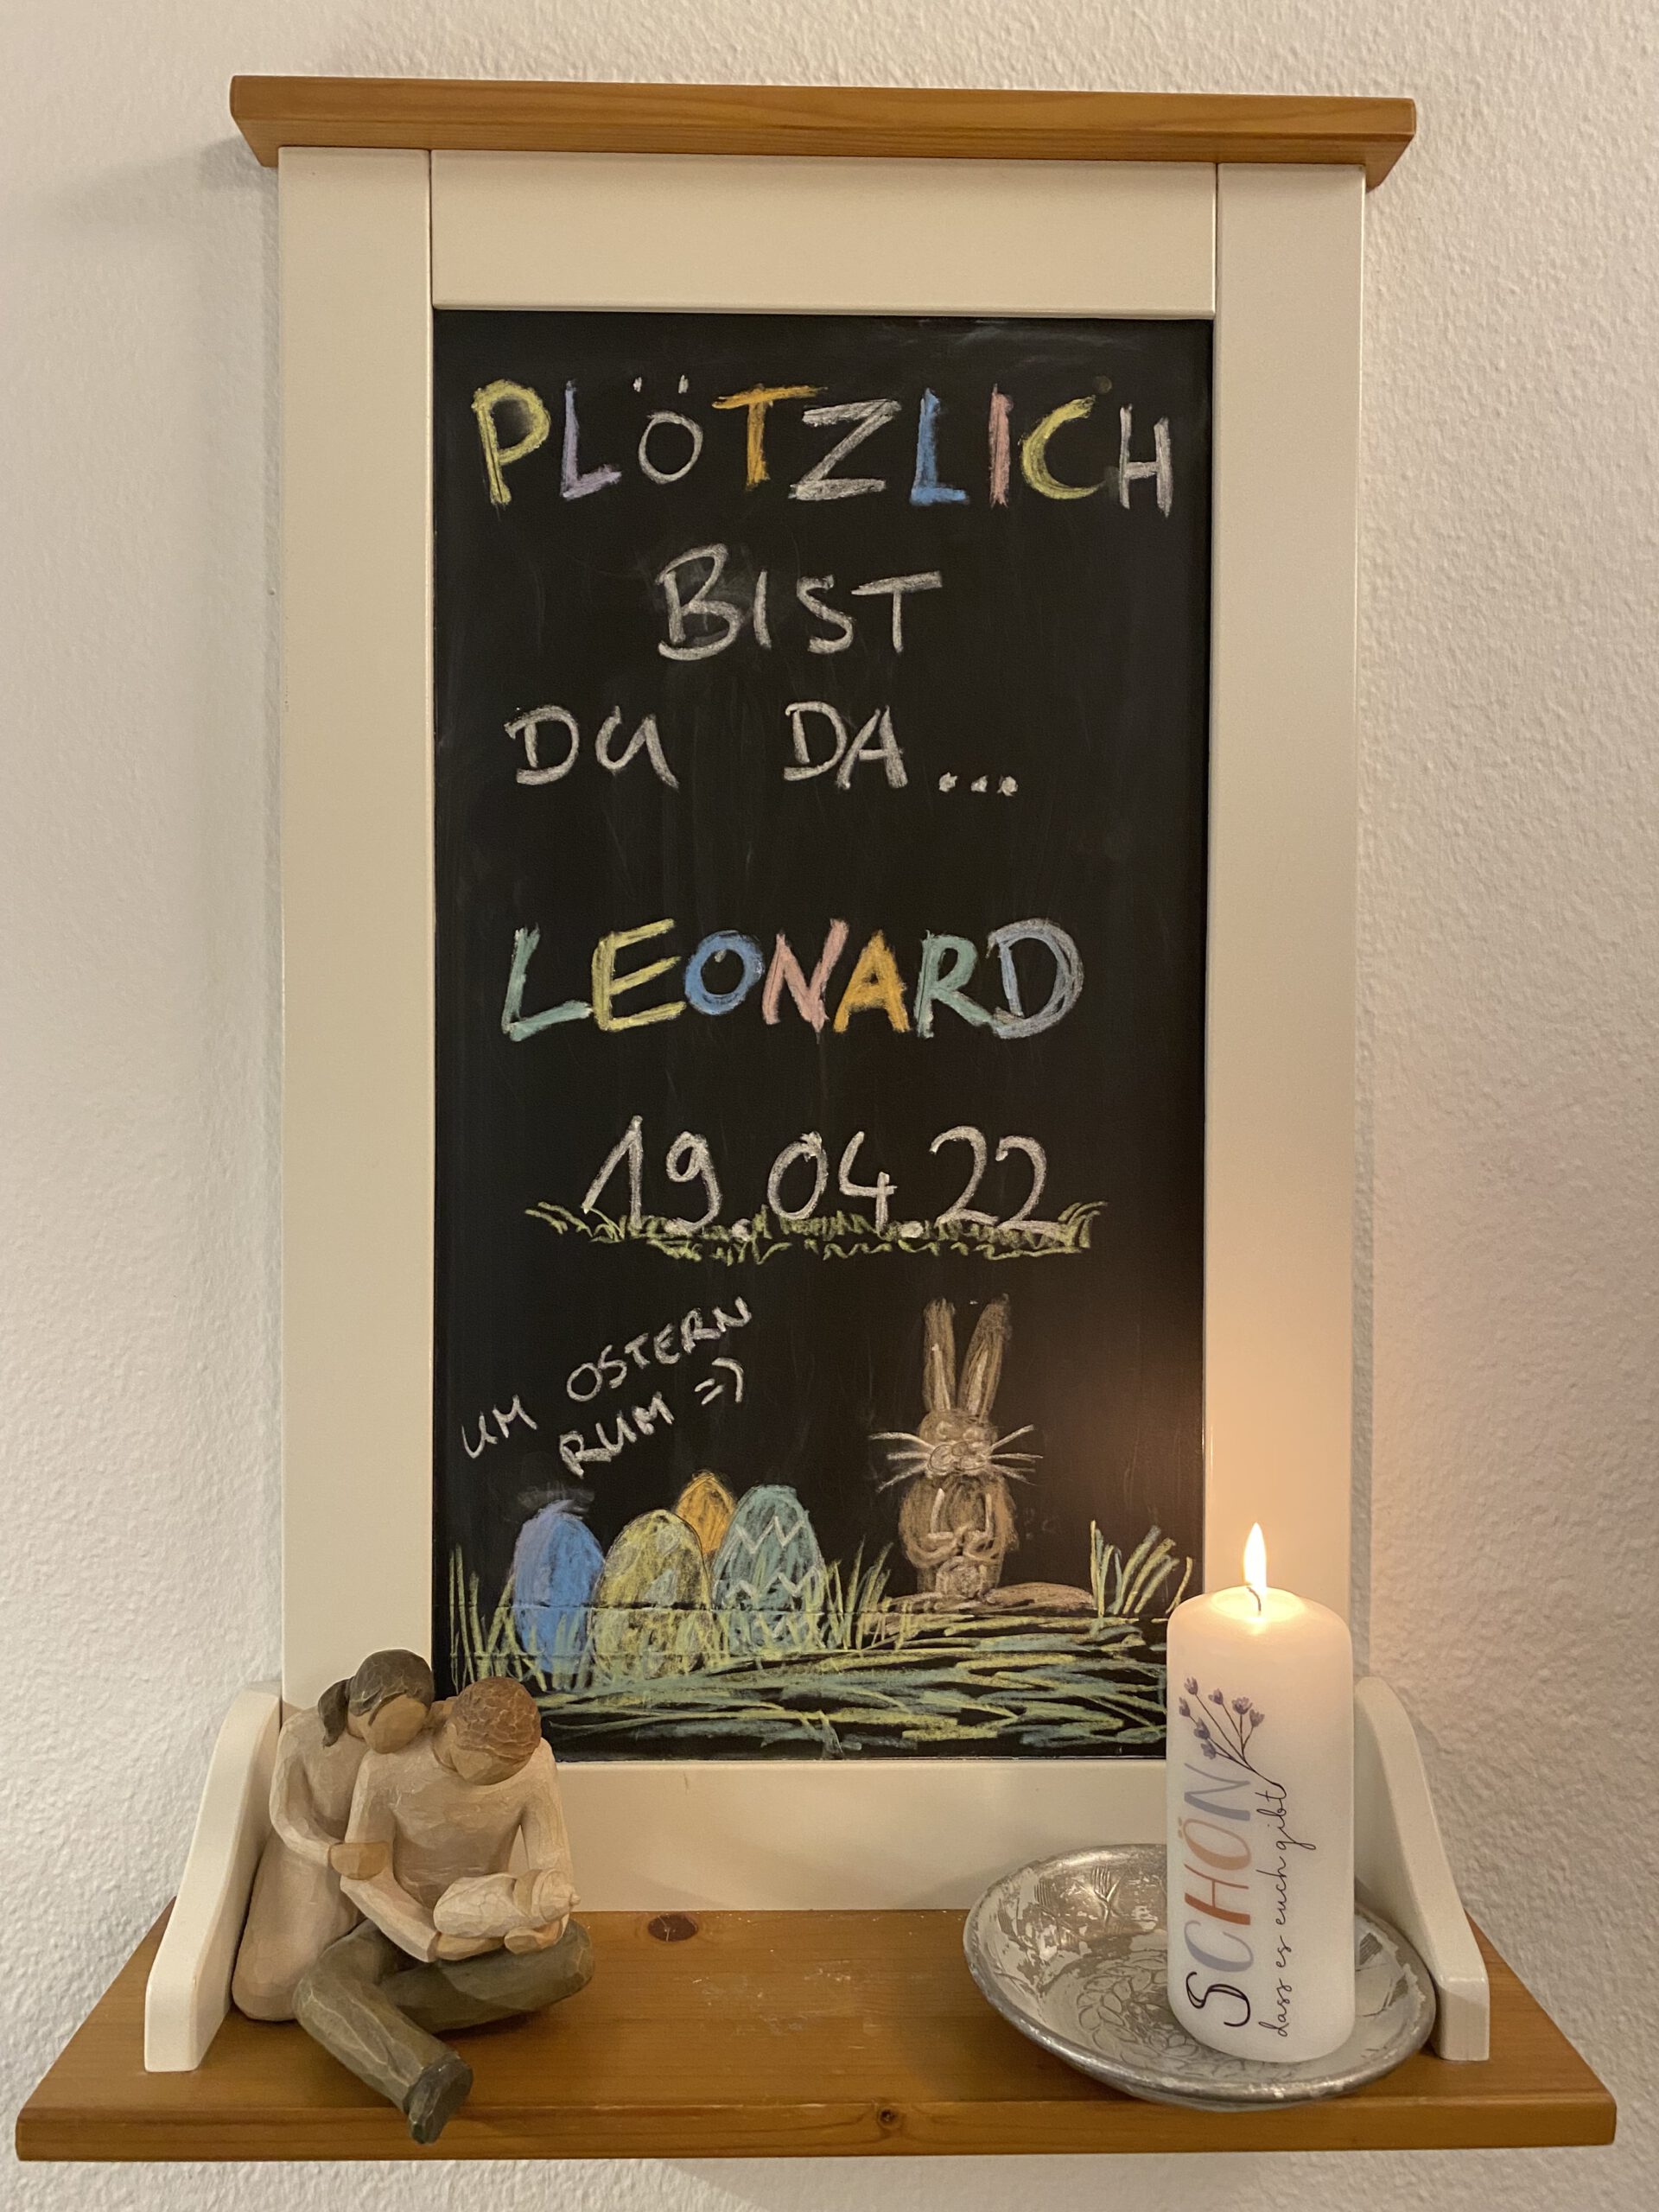 19.04.22 Leonard